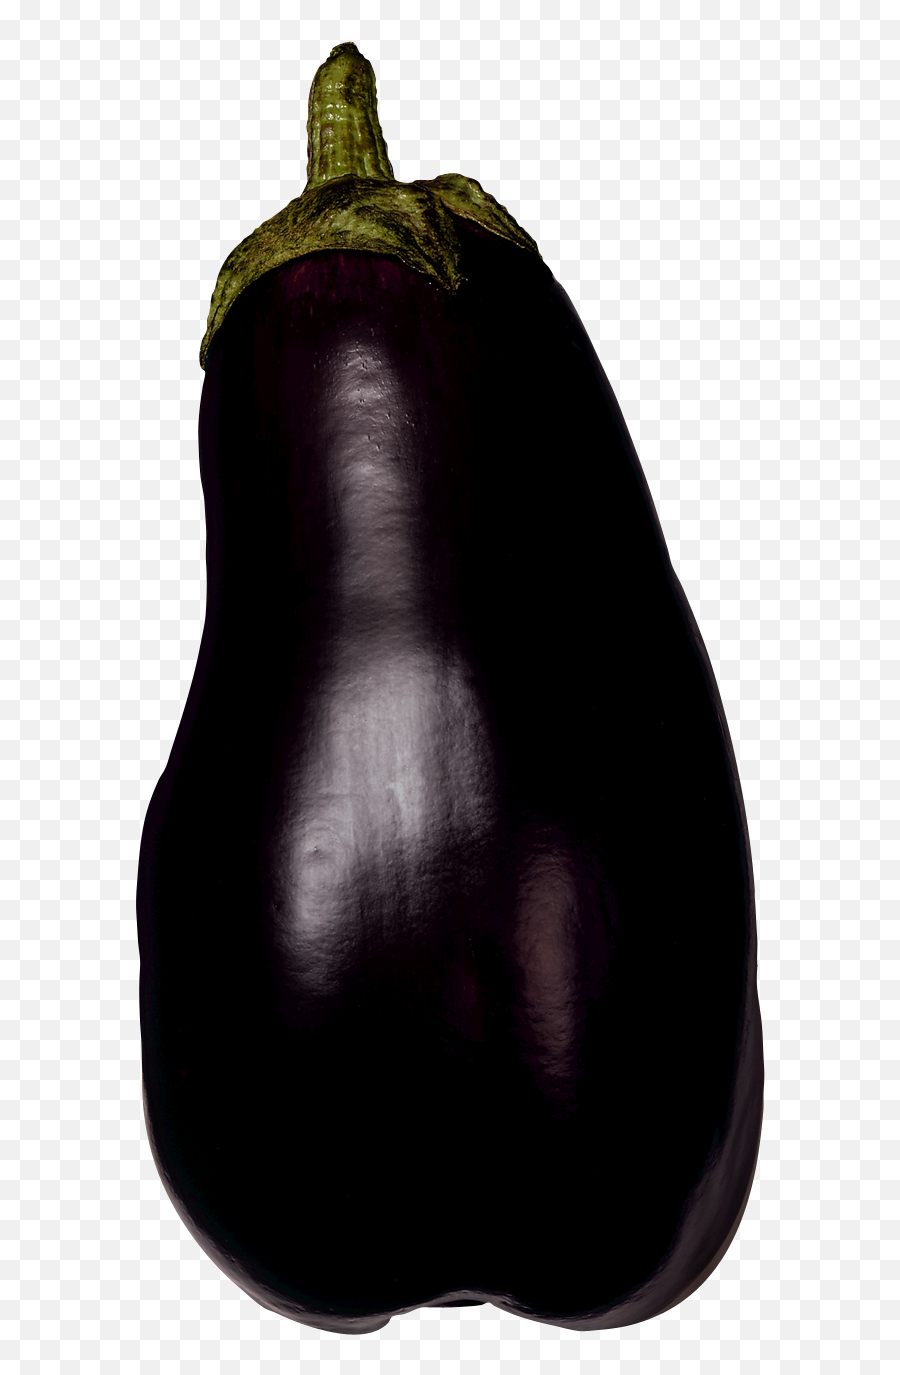 Eggplant Png Images Free Download - Eggplant,Eggplant Transparent